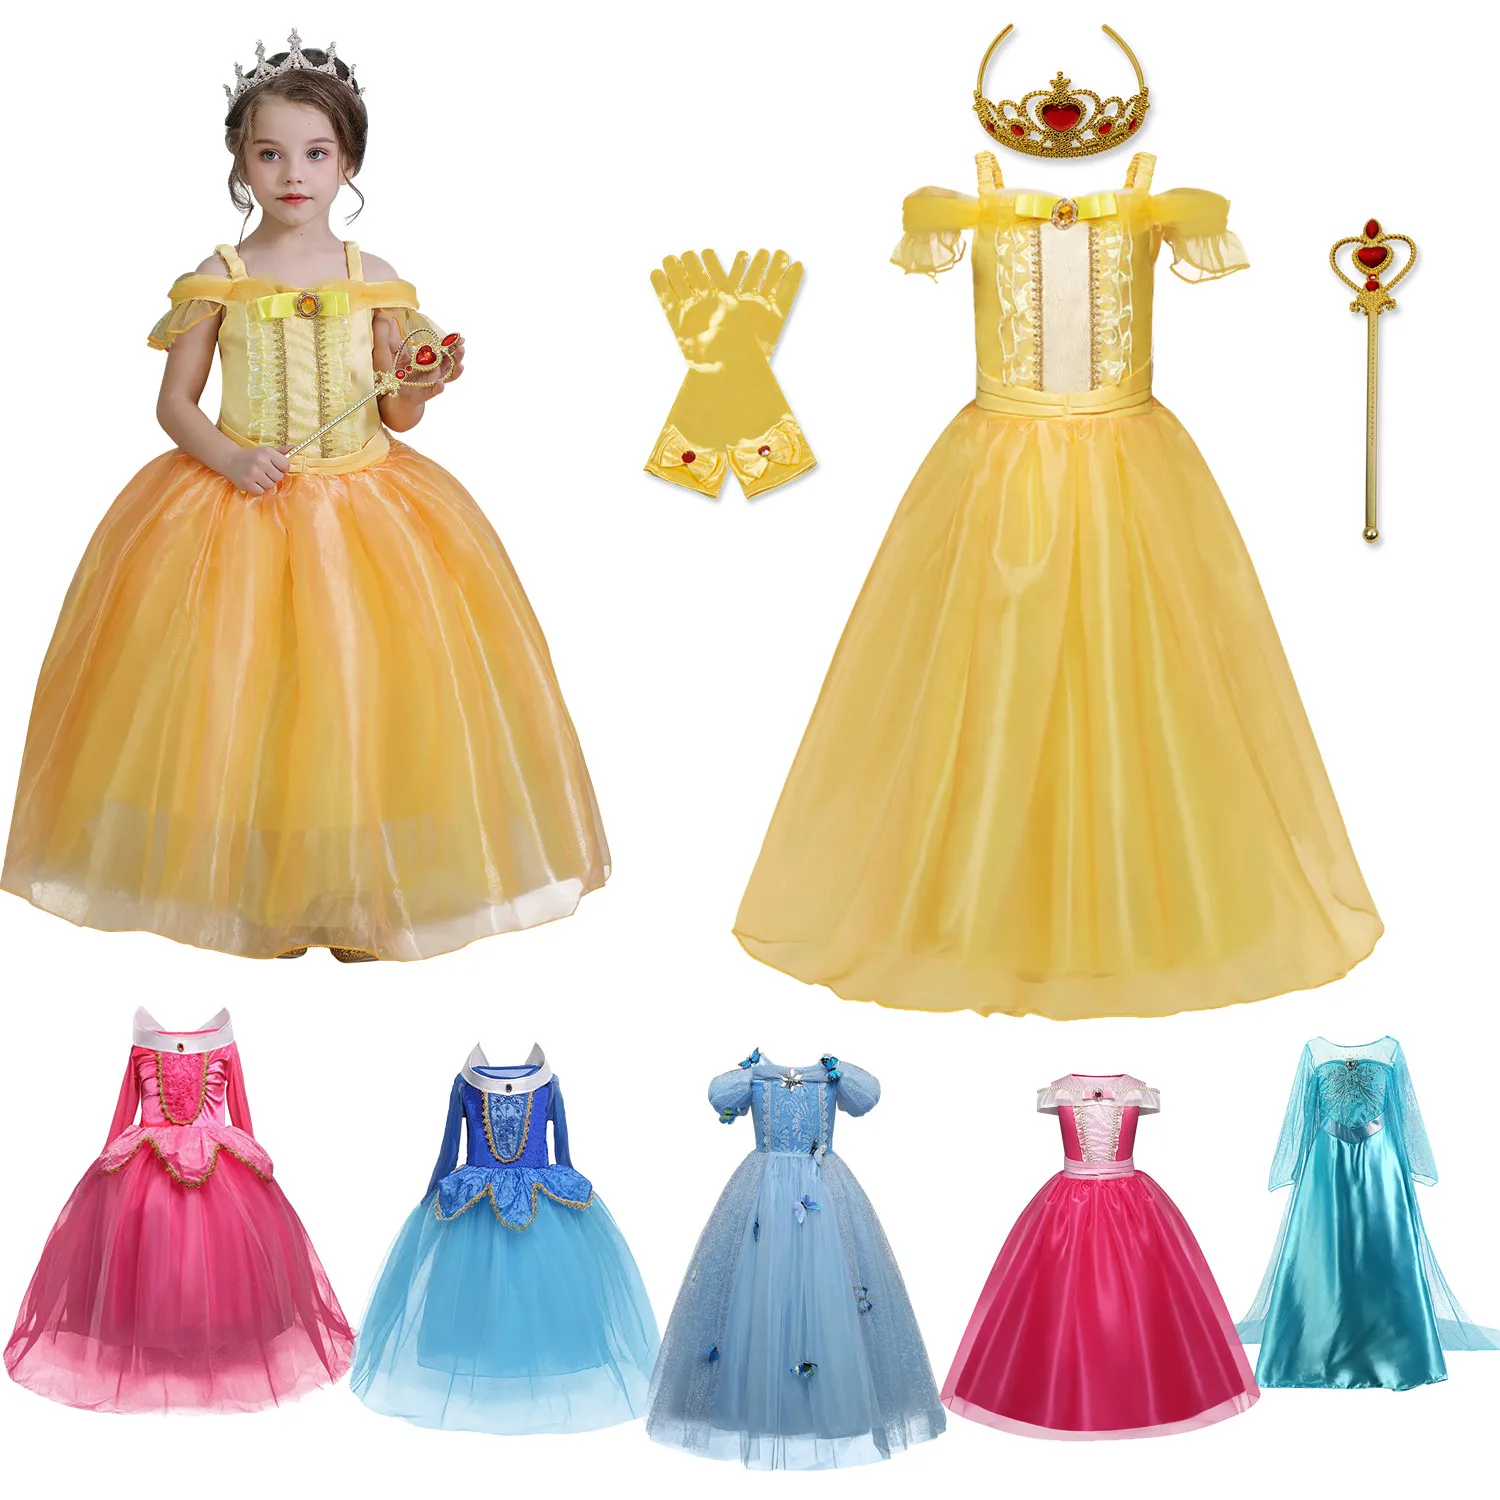 

Baby Girl Princess Dress 8 10 Years Birthday Chidlren Cosplay Party Cosutme for Kids Halloween Costume Fantasia Infantil Menina